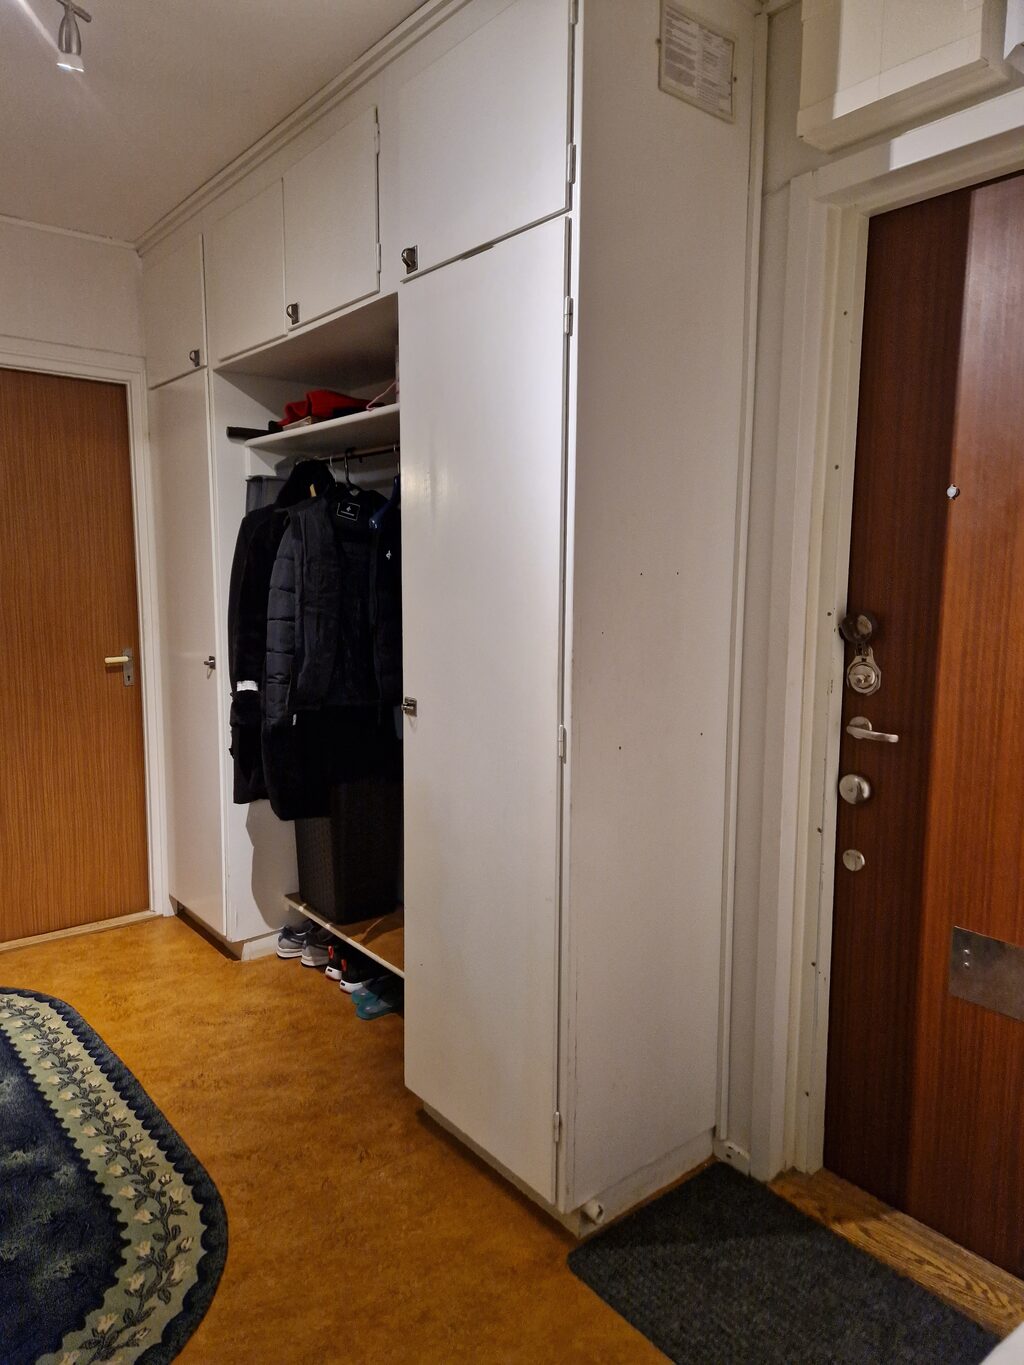 Lägenhetsbyte - Kristinehamnsgatan 80, 123 44 Farsta